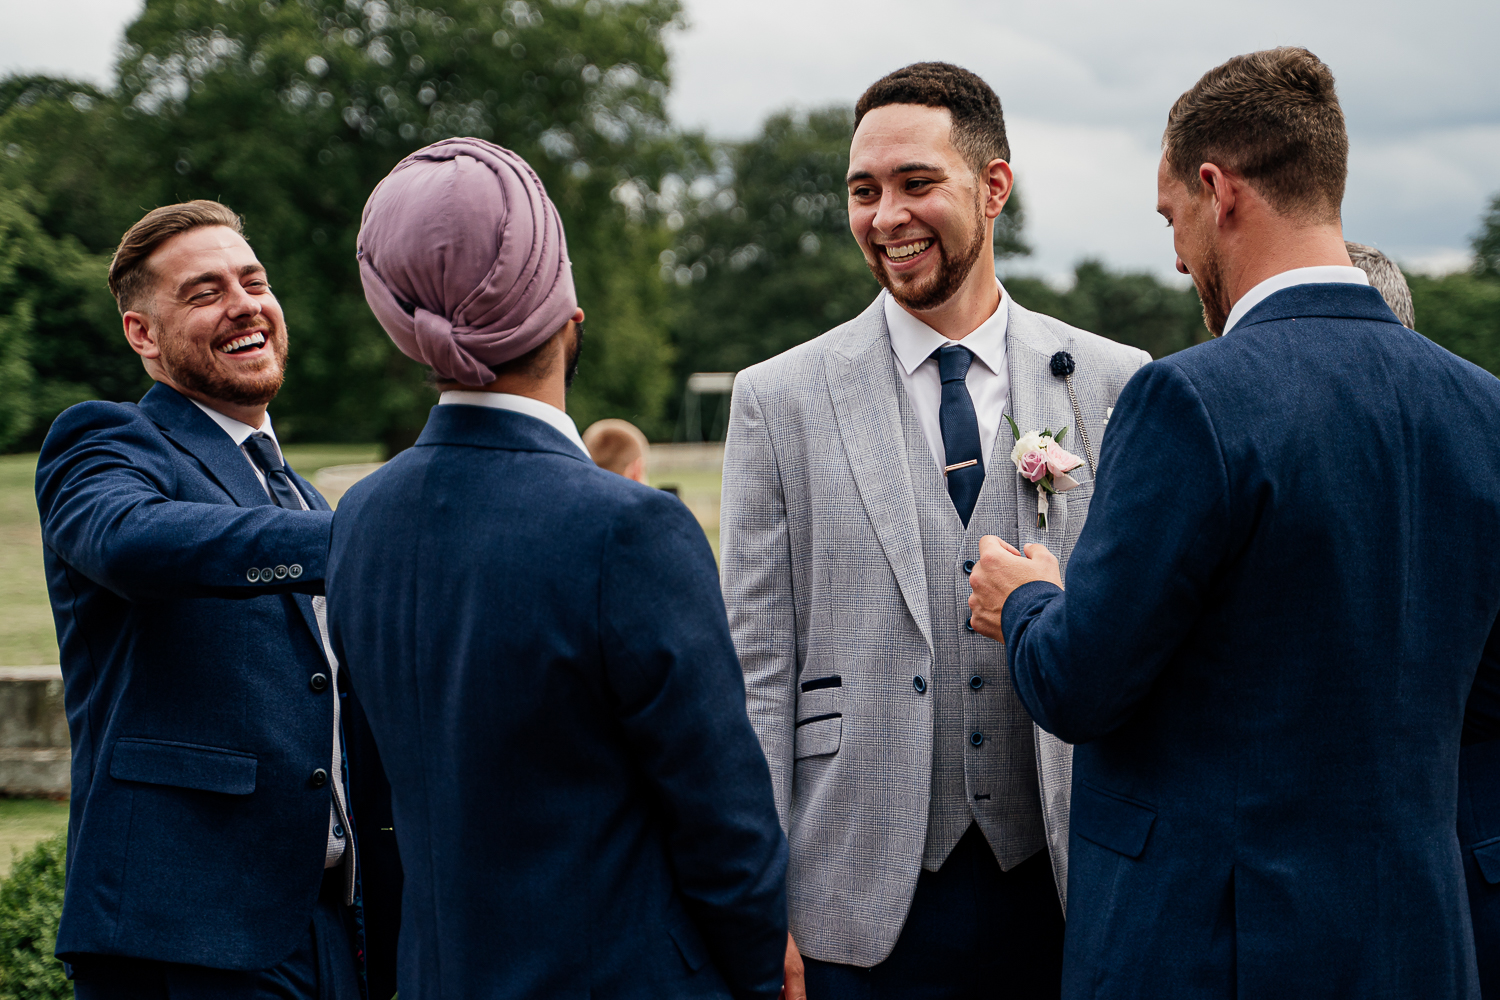 Groom laughing with his groomsmen